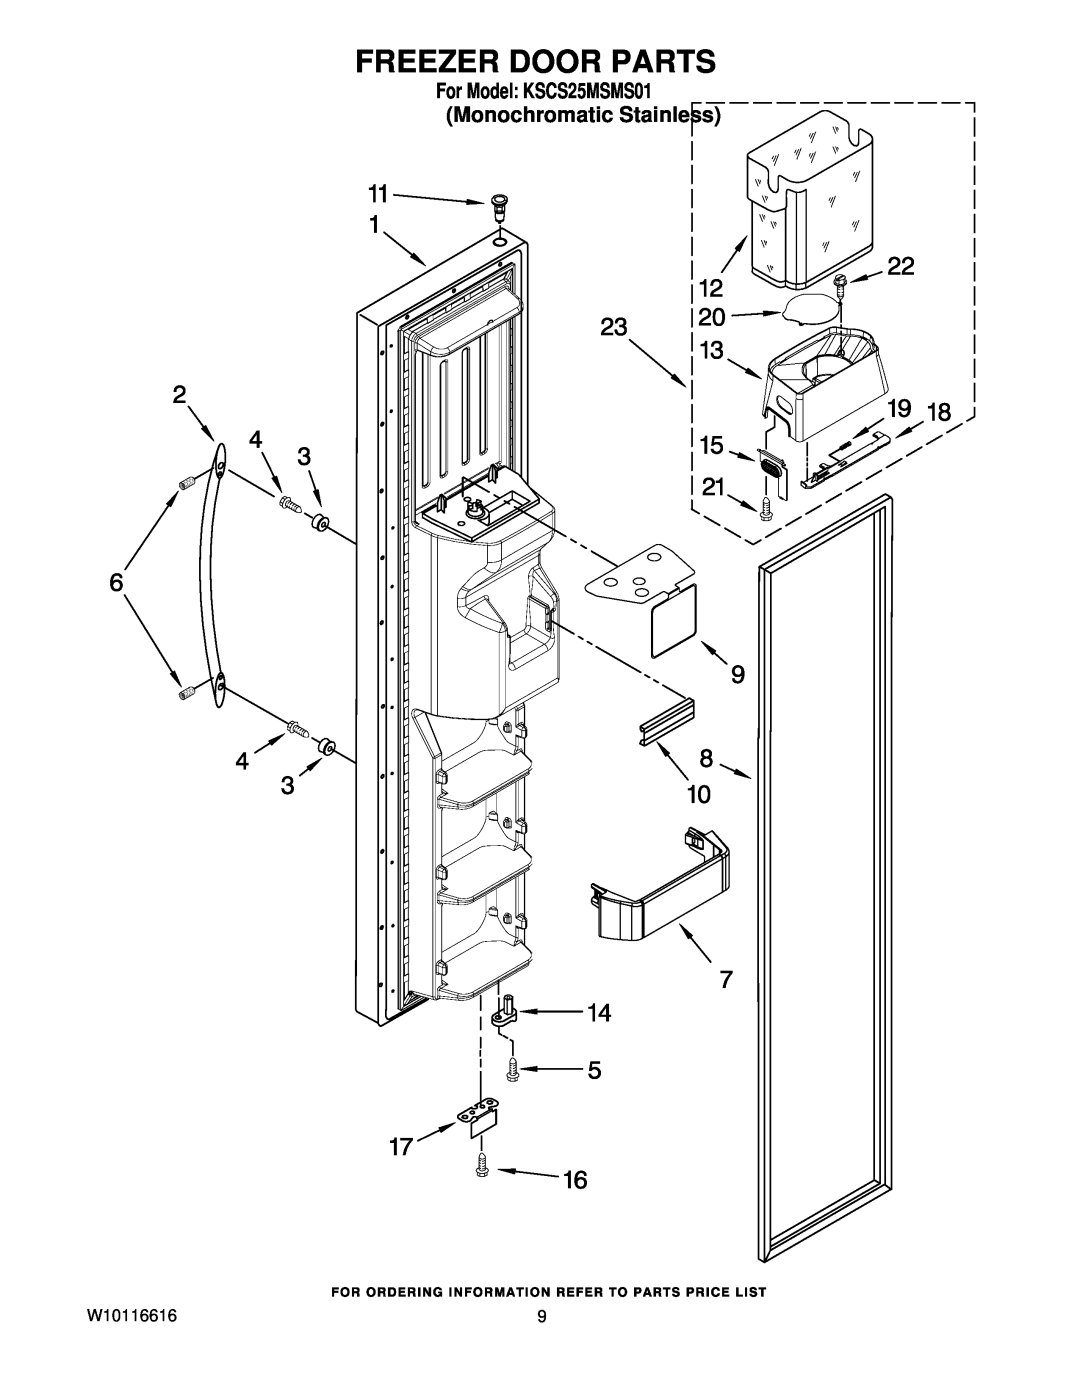 KitchenAid manual Freezer Door Parts, For Model KSCS25MSMS01 Monochromatic Stainless 